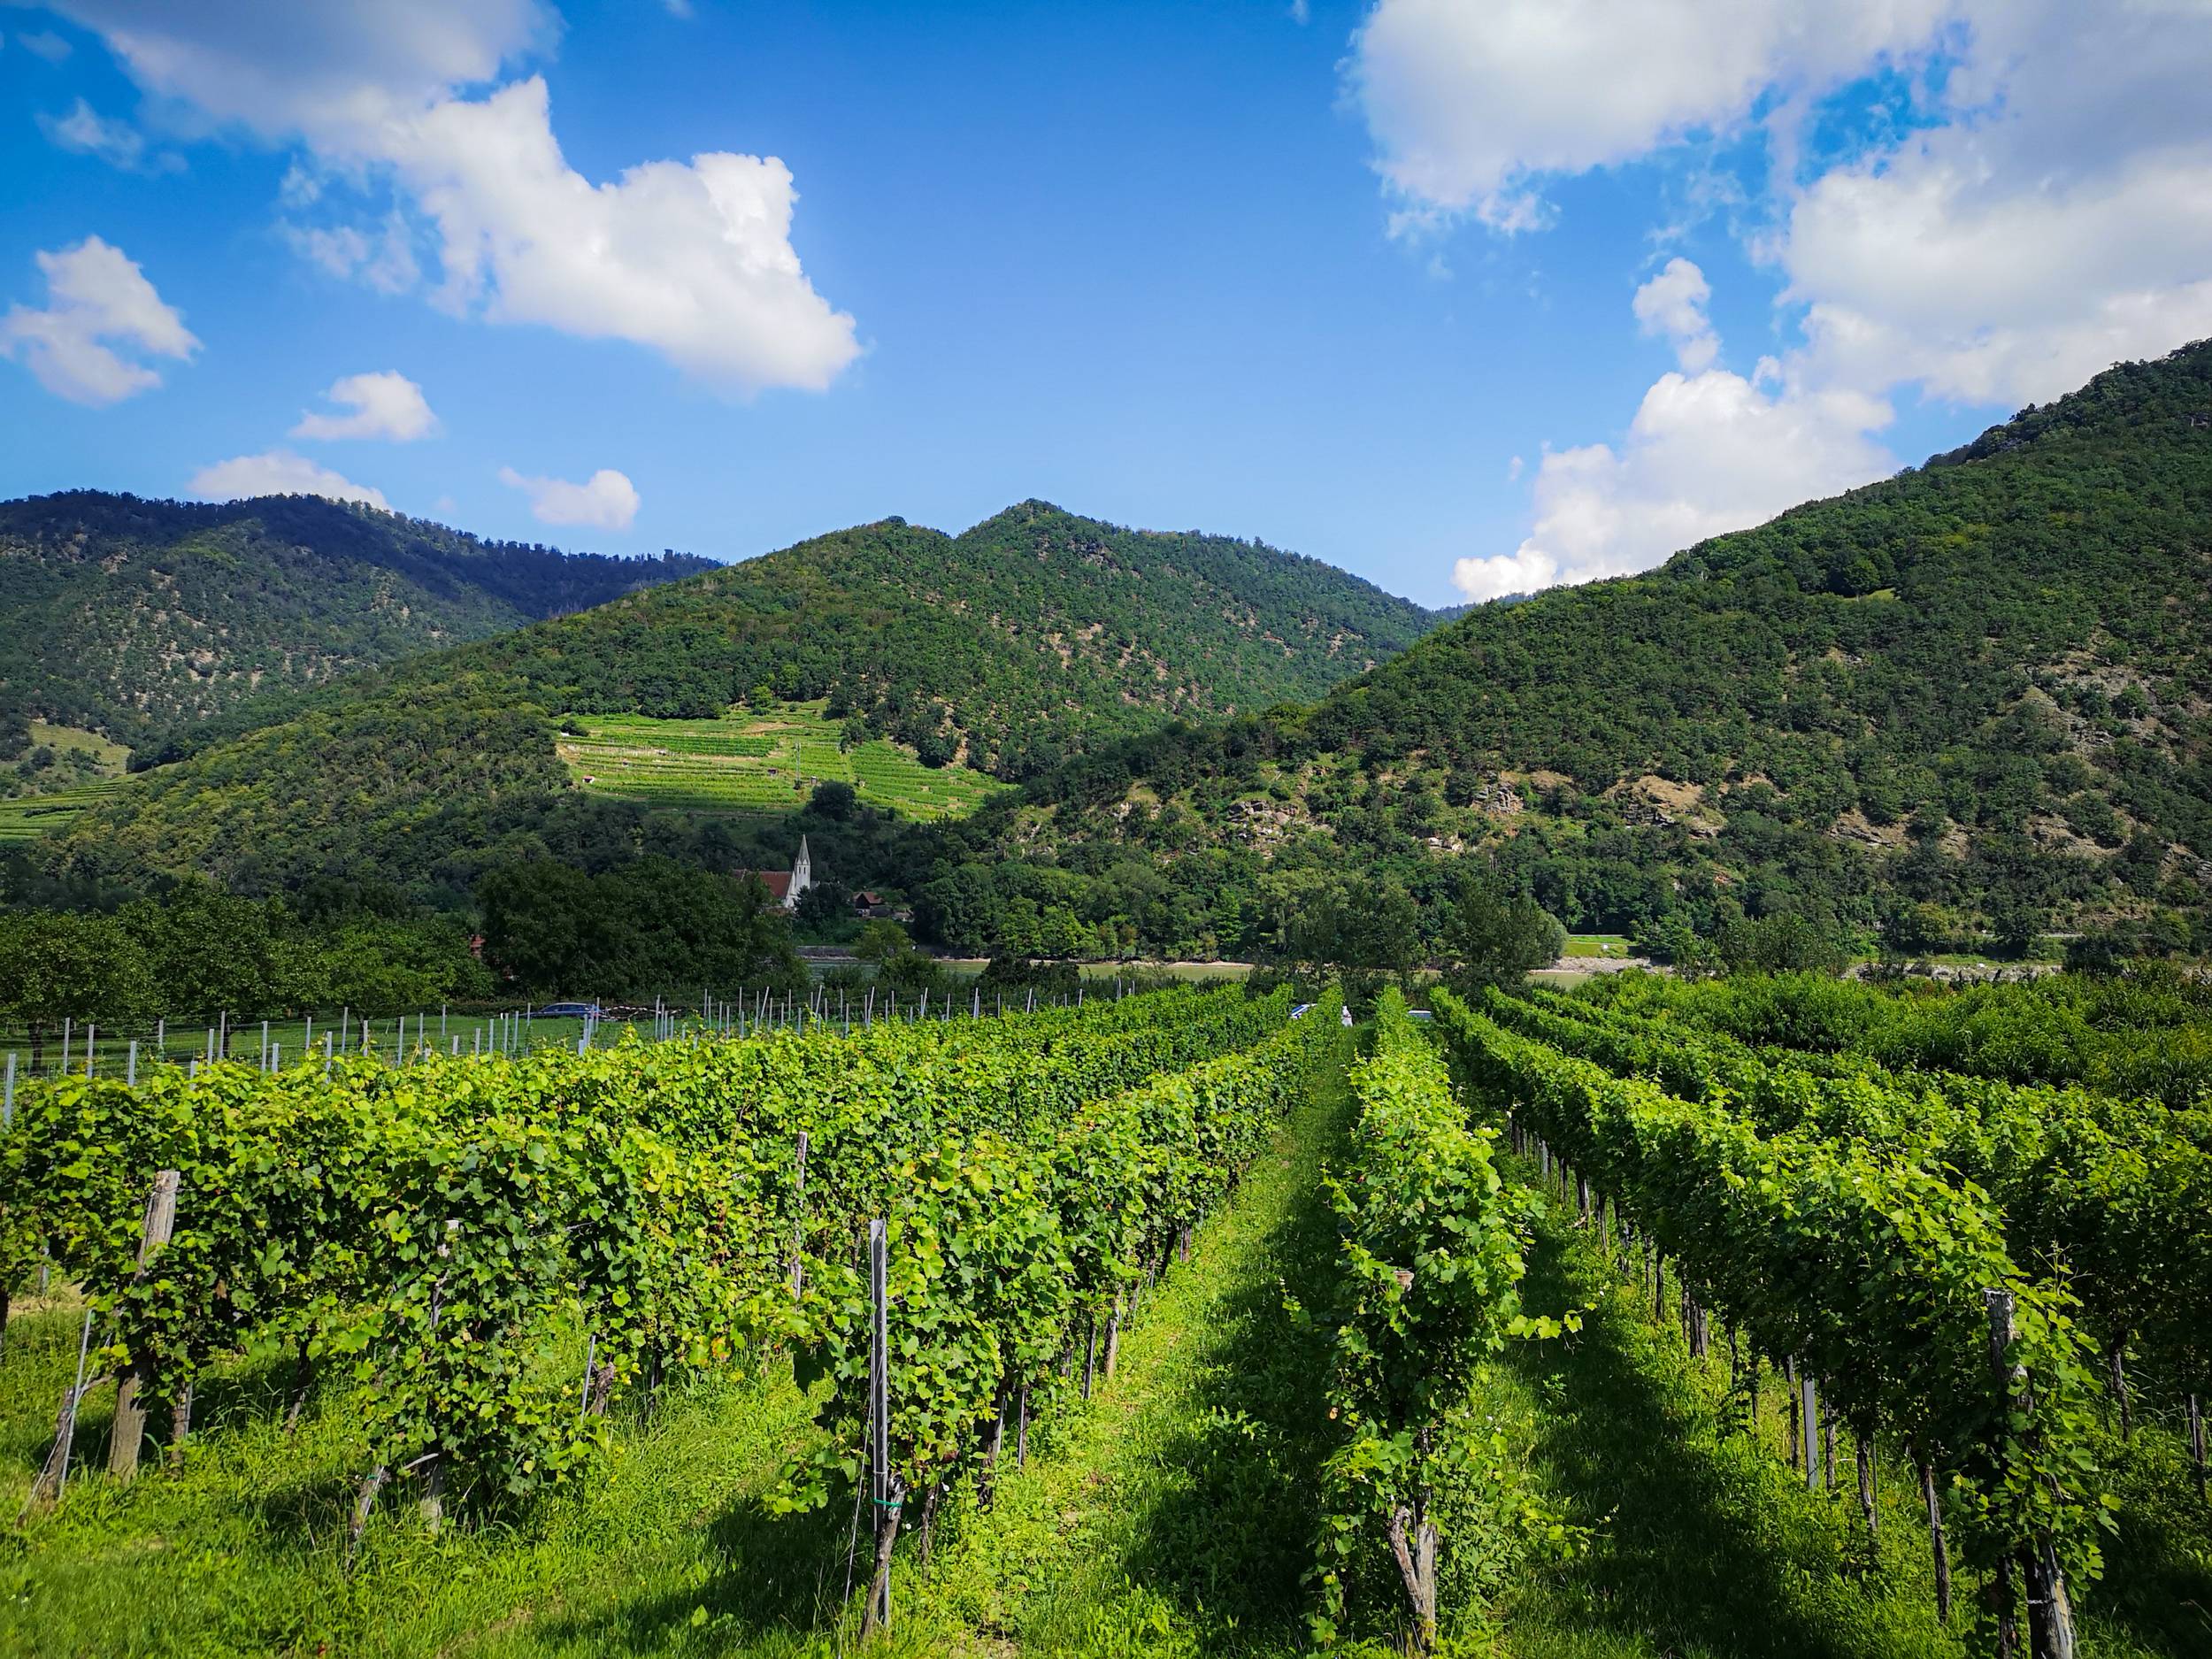 Vineyards of Wachau Domaine, Lower Austria